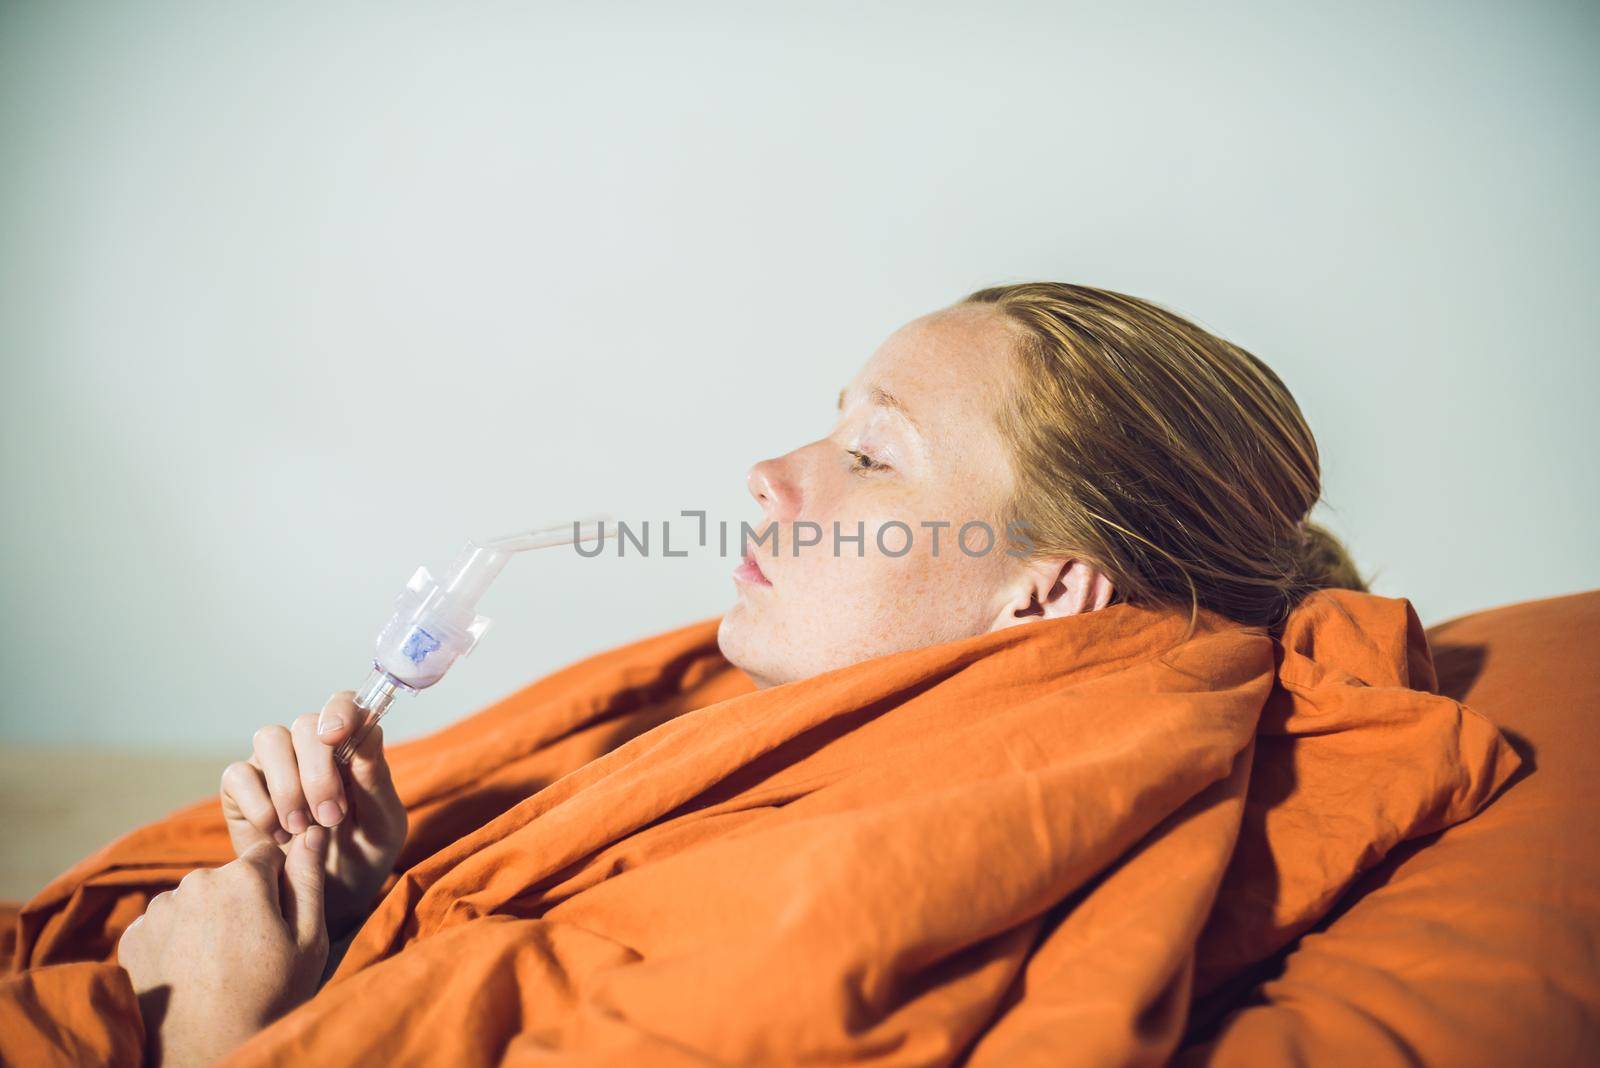 Woman with flu or cold symptoms making inhalation with nebulizer - medical inhalation therapy by galitskaya